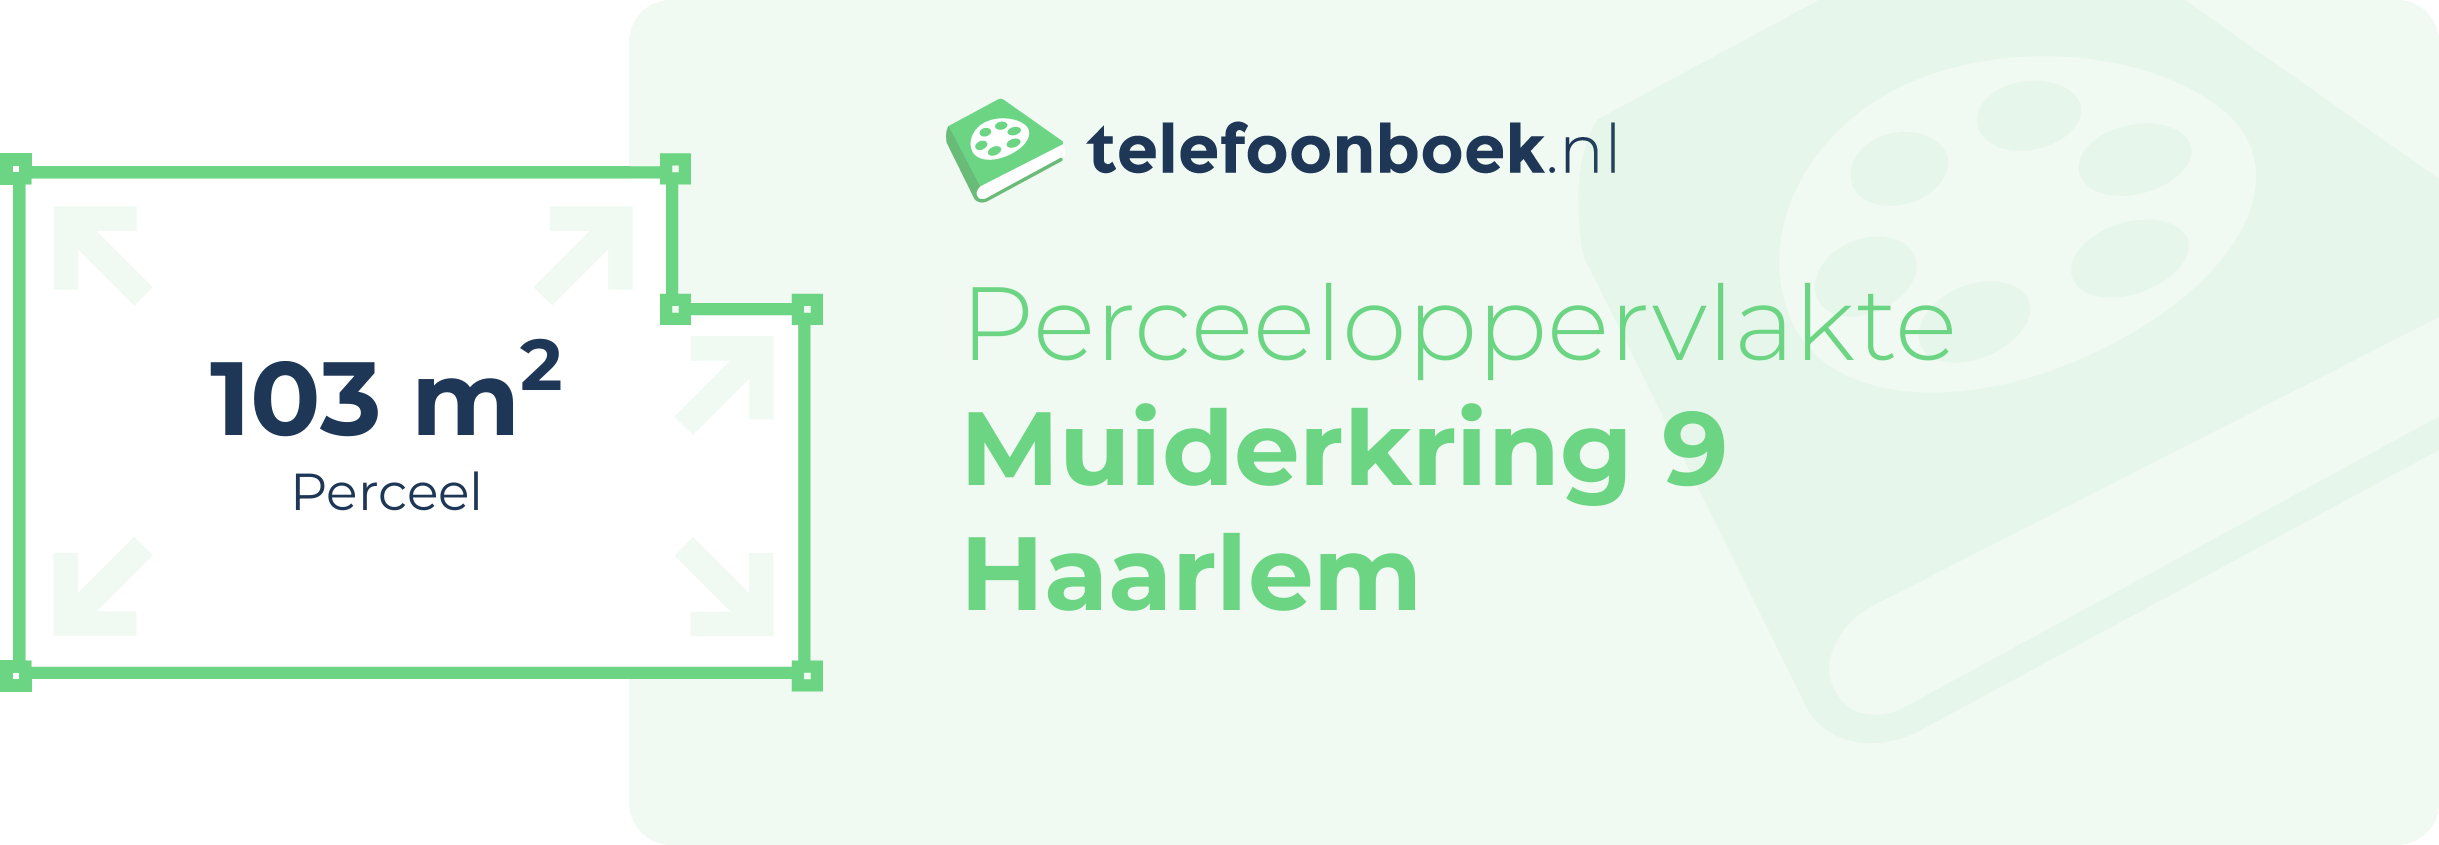 Perceeloppervlakte Muiderkring 9 Haarlem